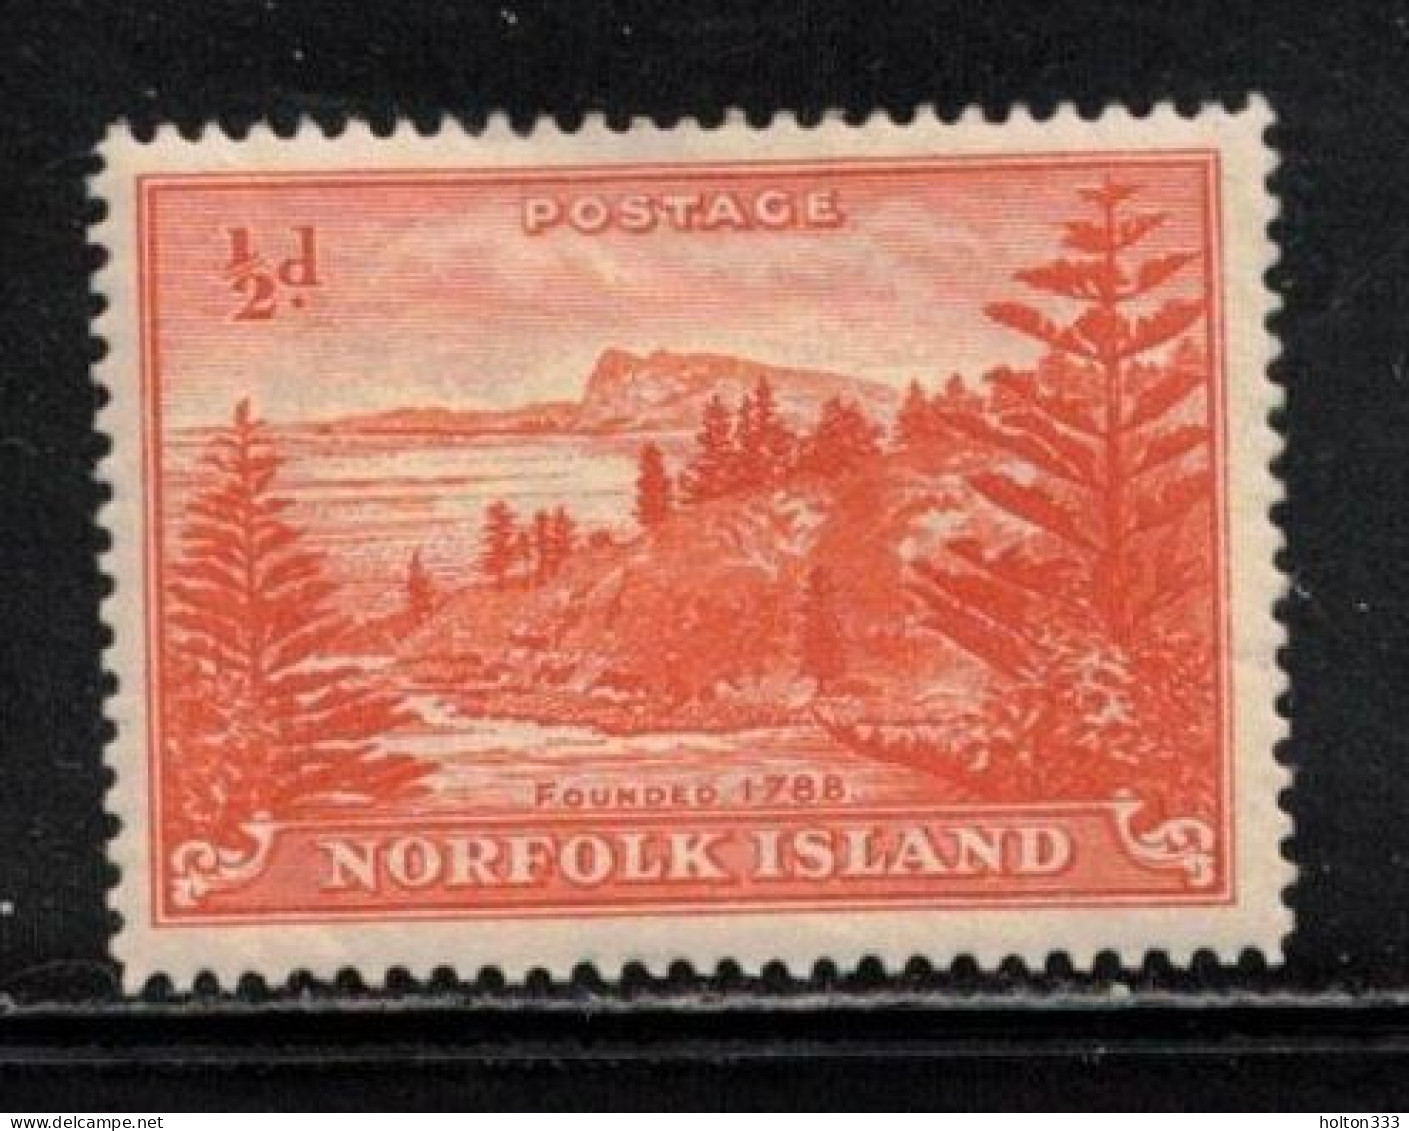 NORFOLK ISLAND Scott # 1 MH - Founded 1788 - Ile Norfolk